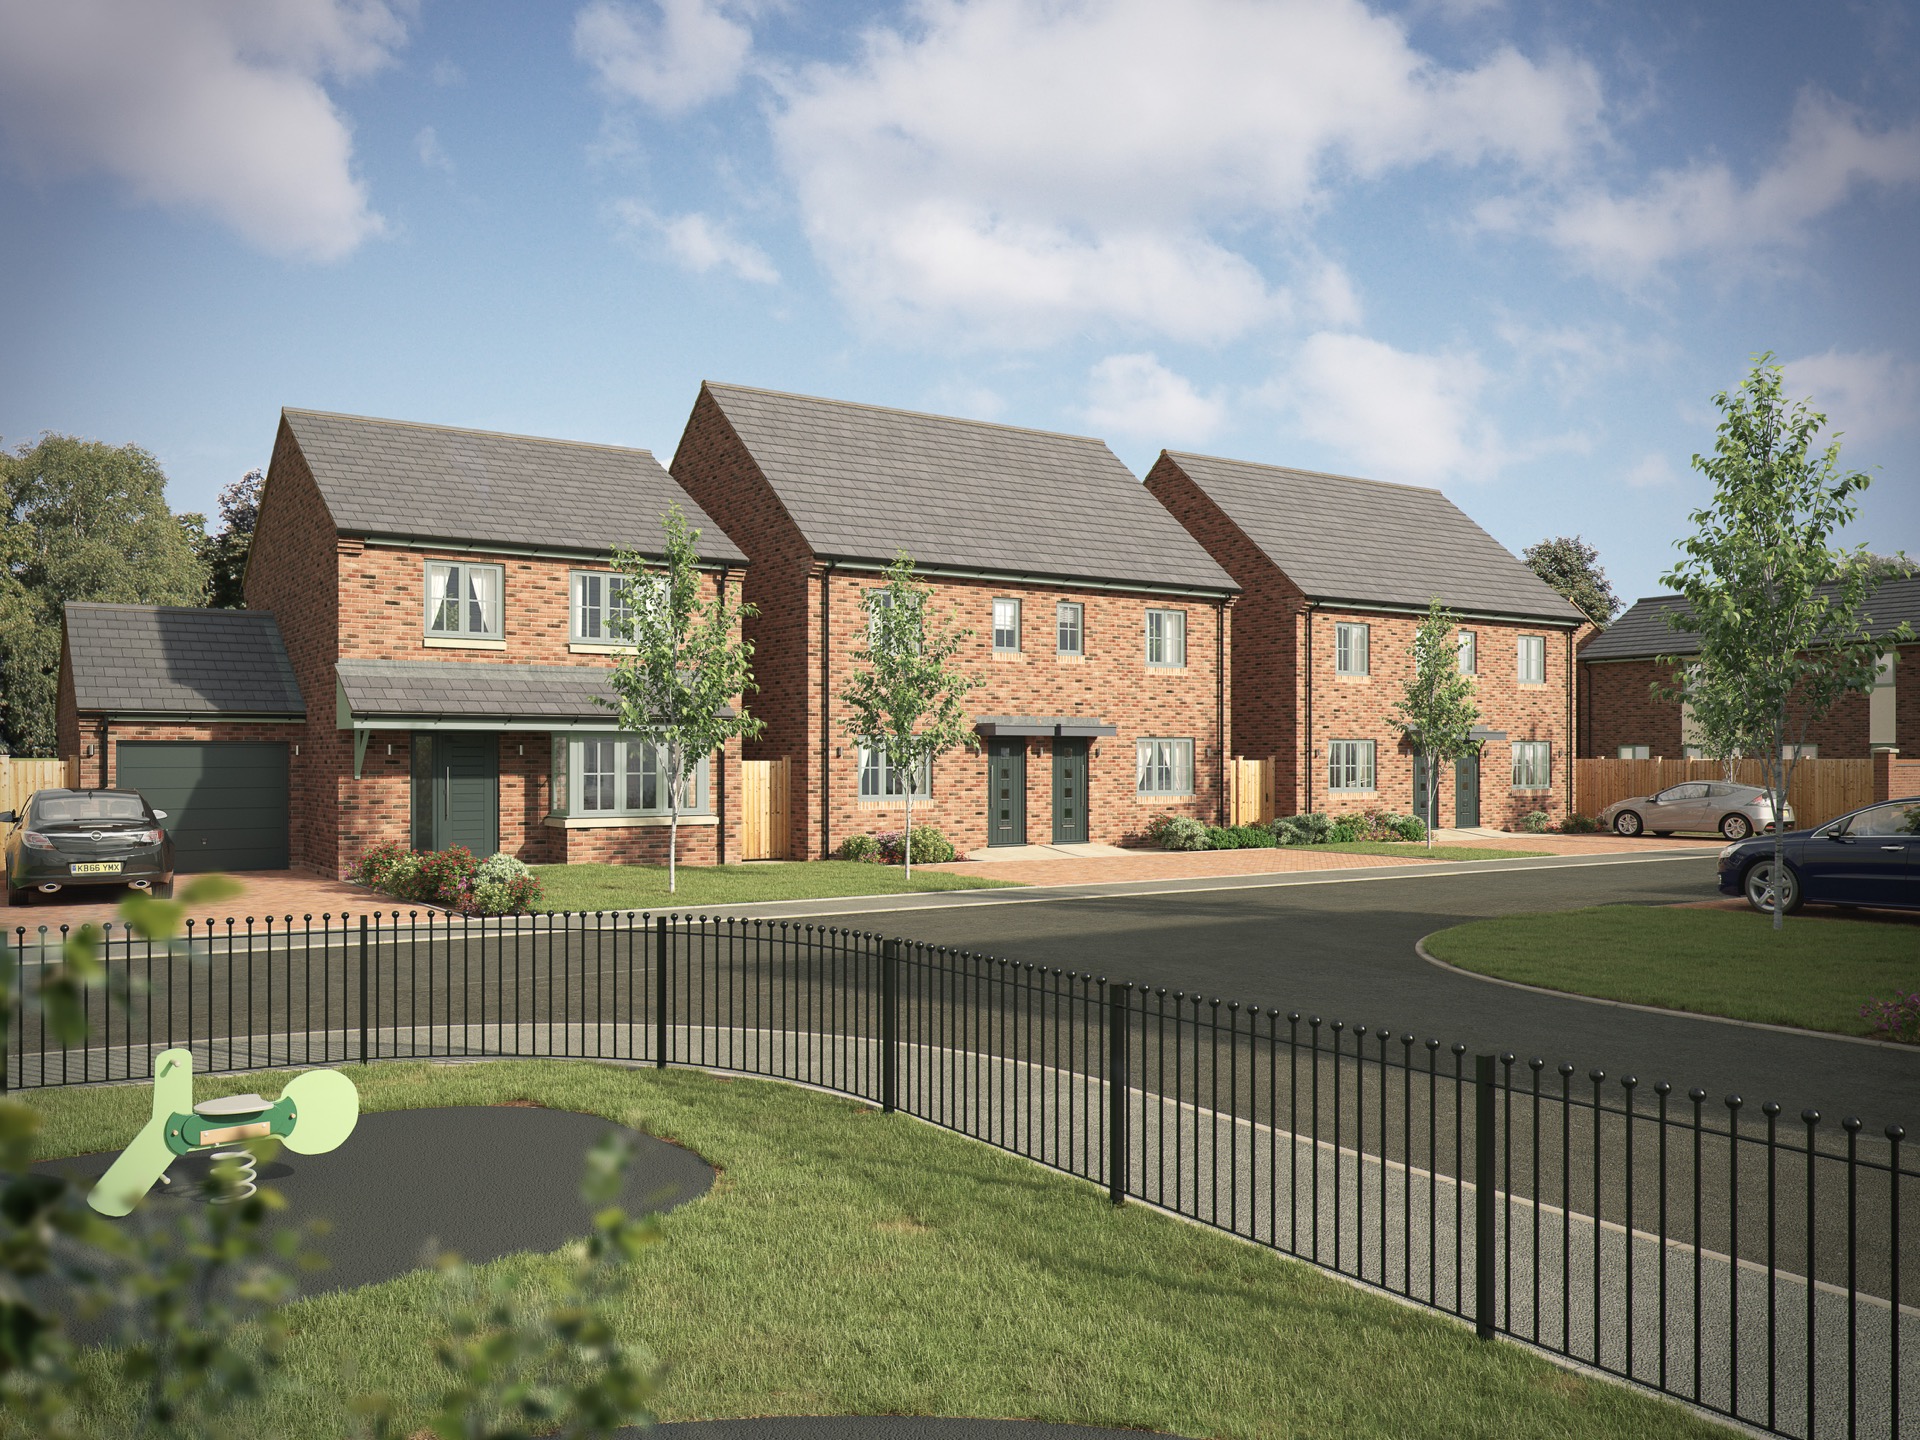 21 new homes confirmed for Market Drayton